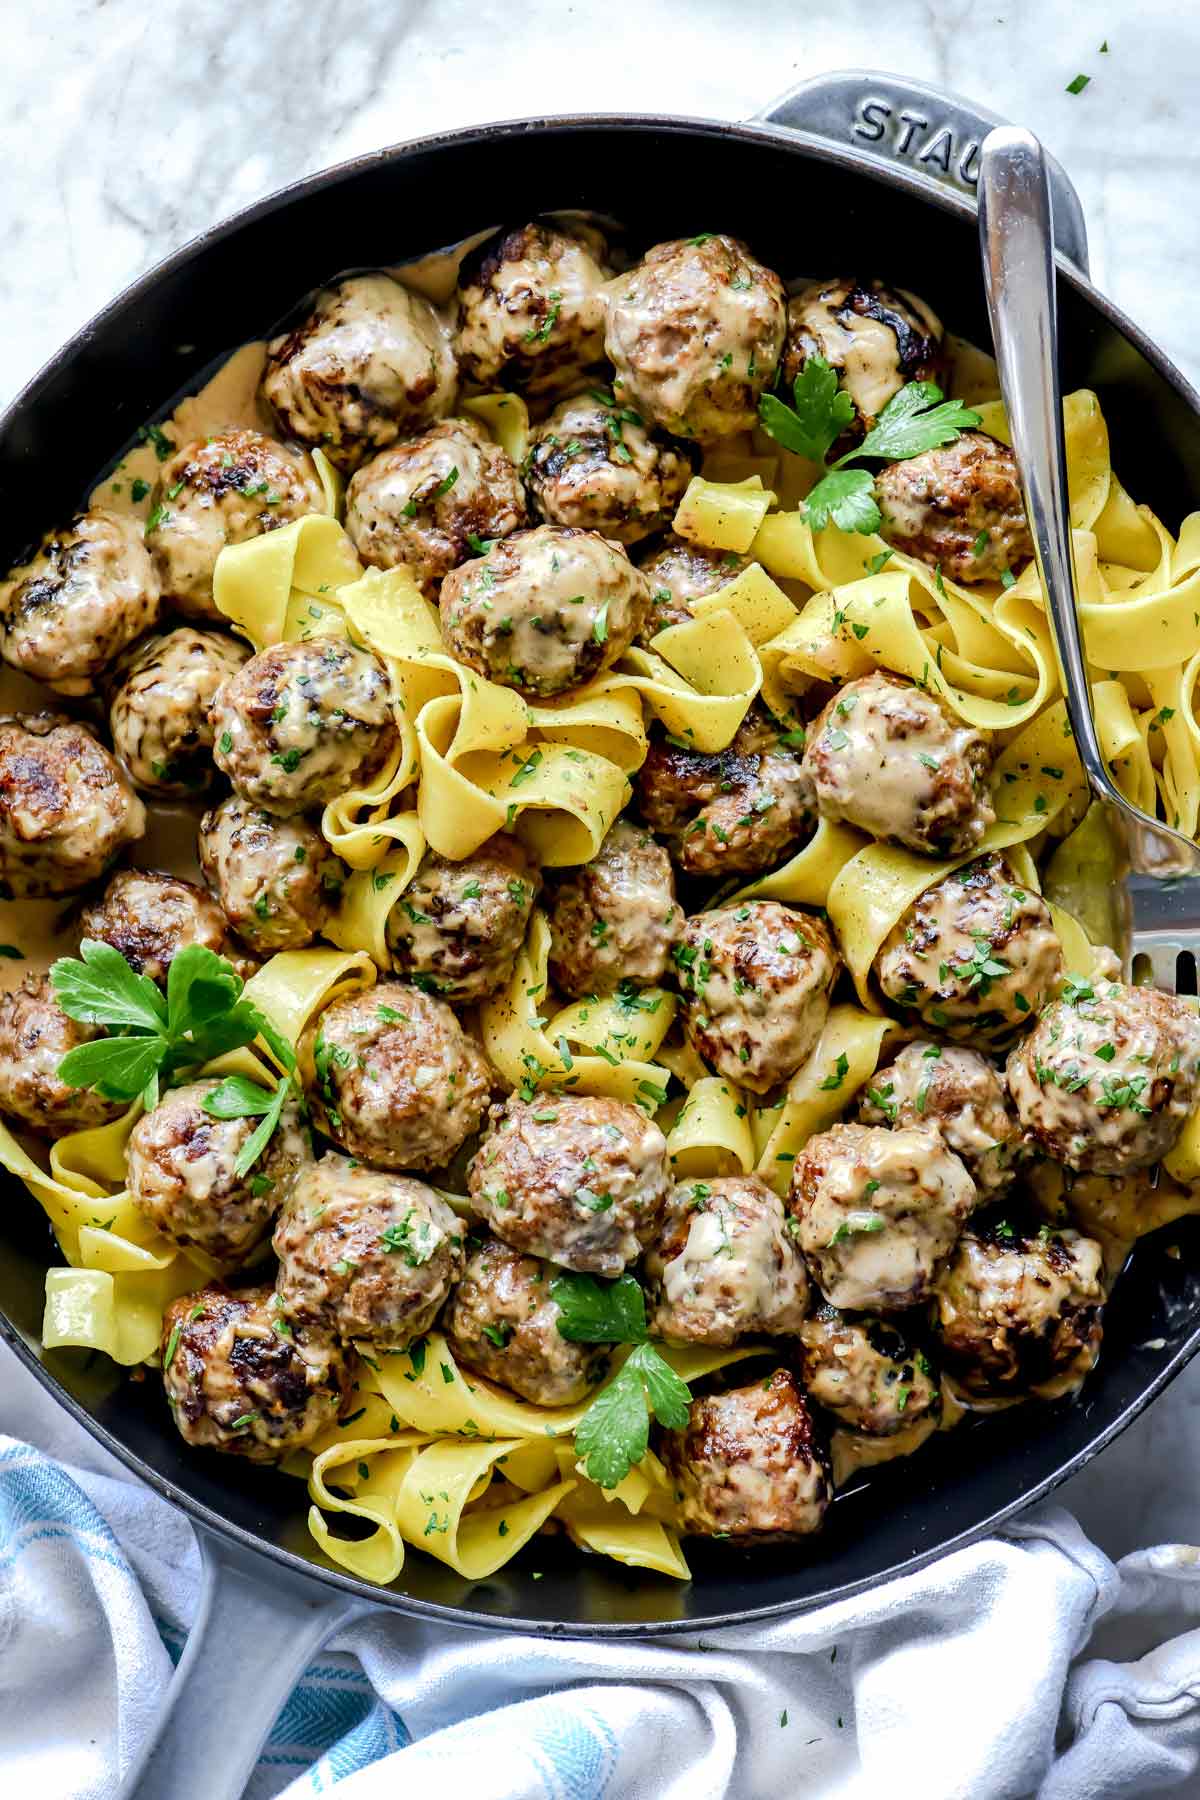 Swedish Meatballs (Ikea Meatballs) - Craving Home Cooked